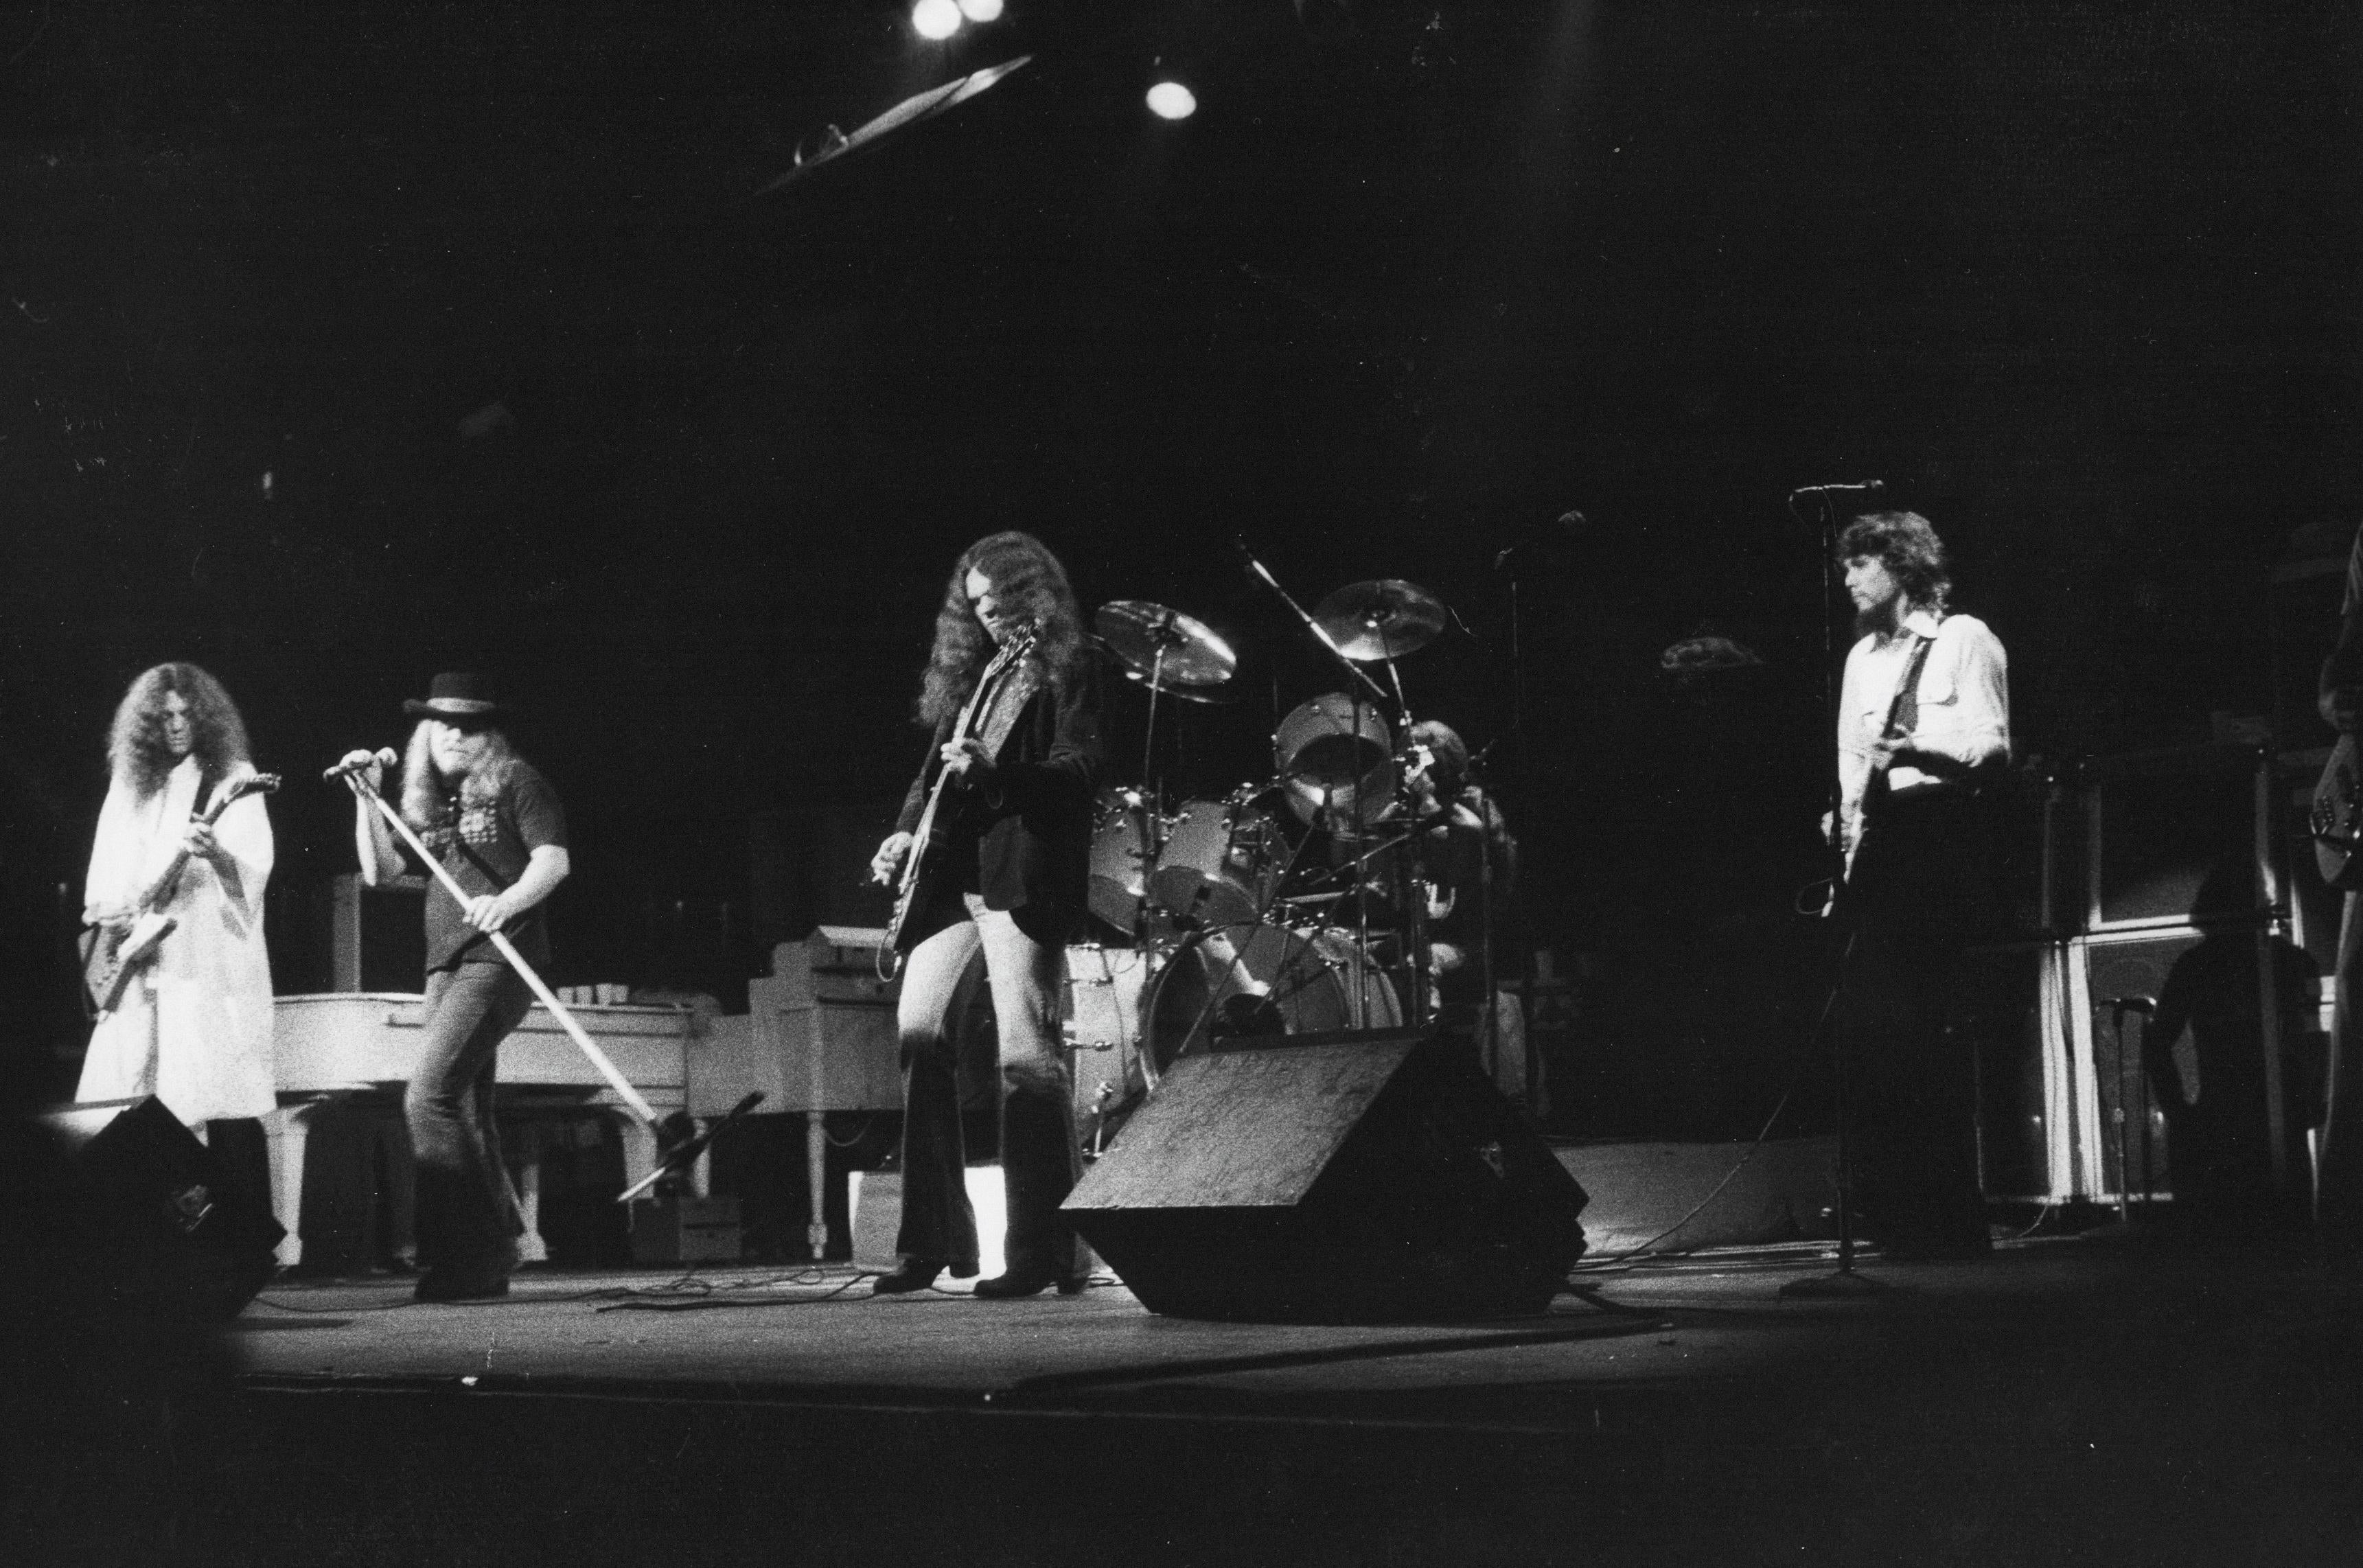 Paul Canty Portrait Photograph - Lynyrd Skynyrd Performing Live Original Photograph